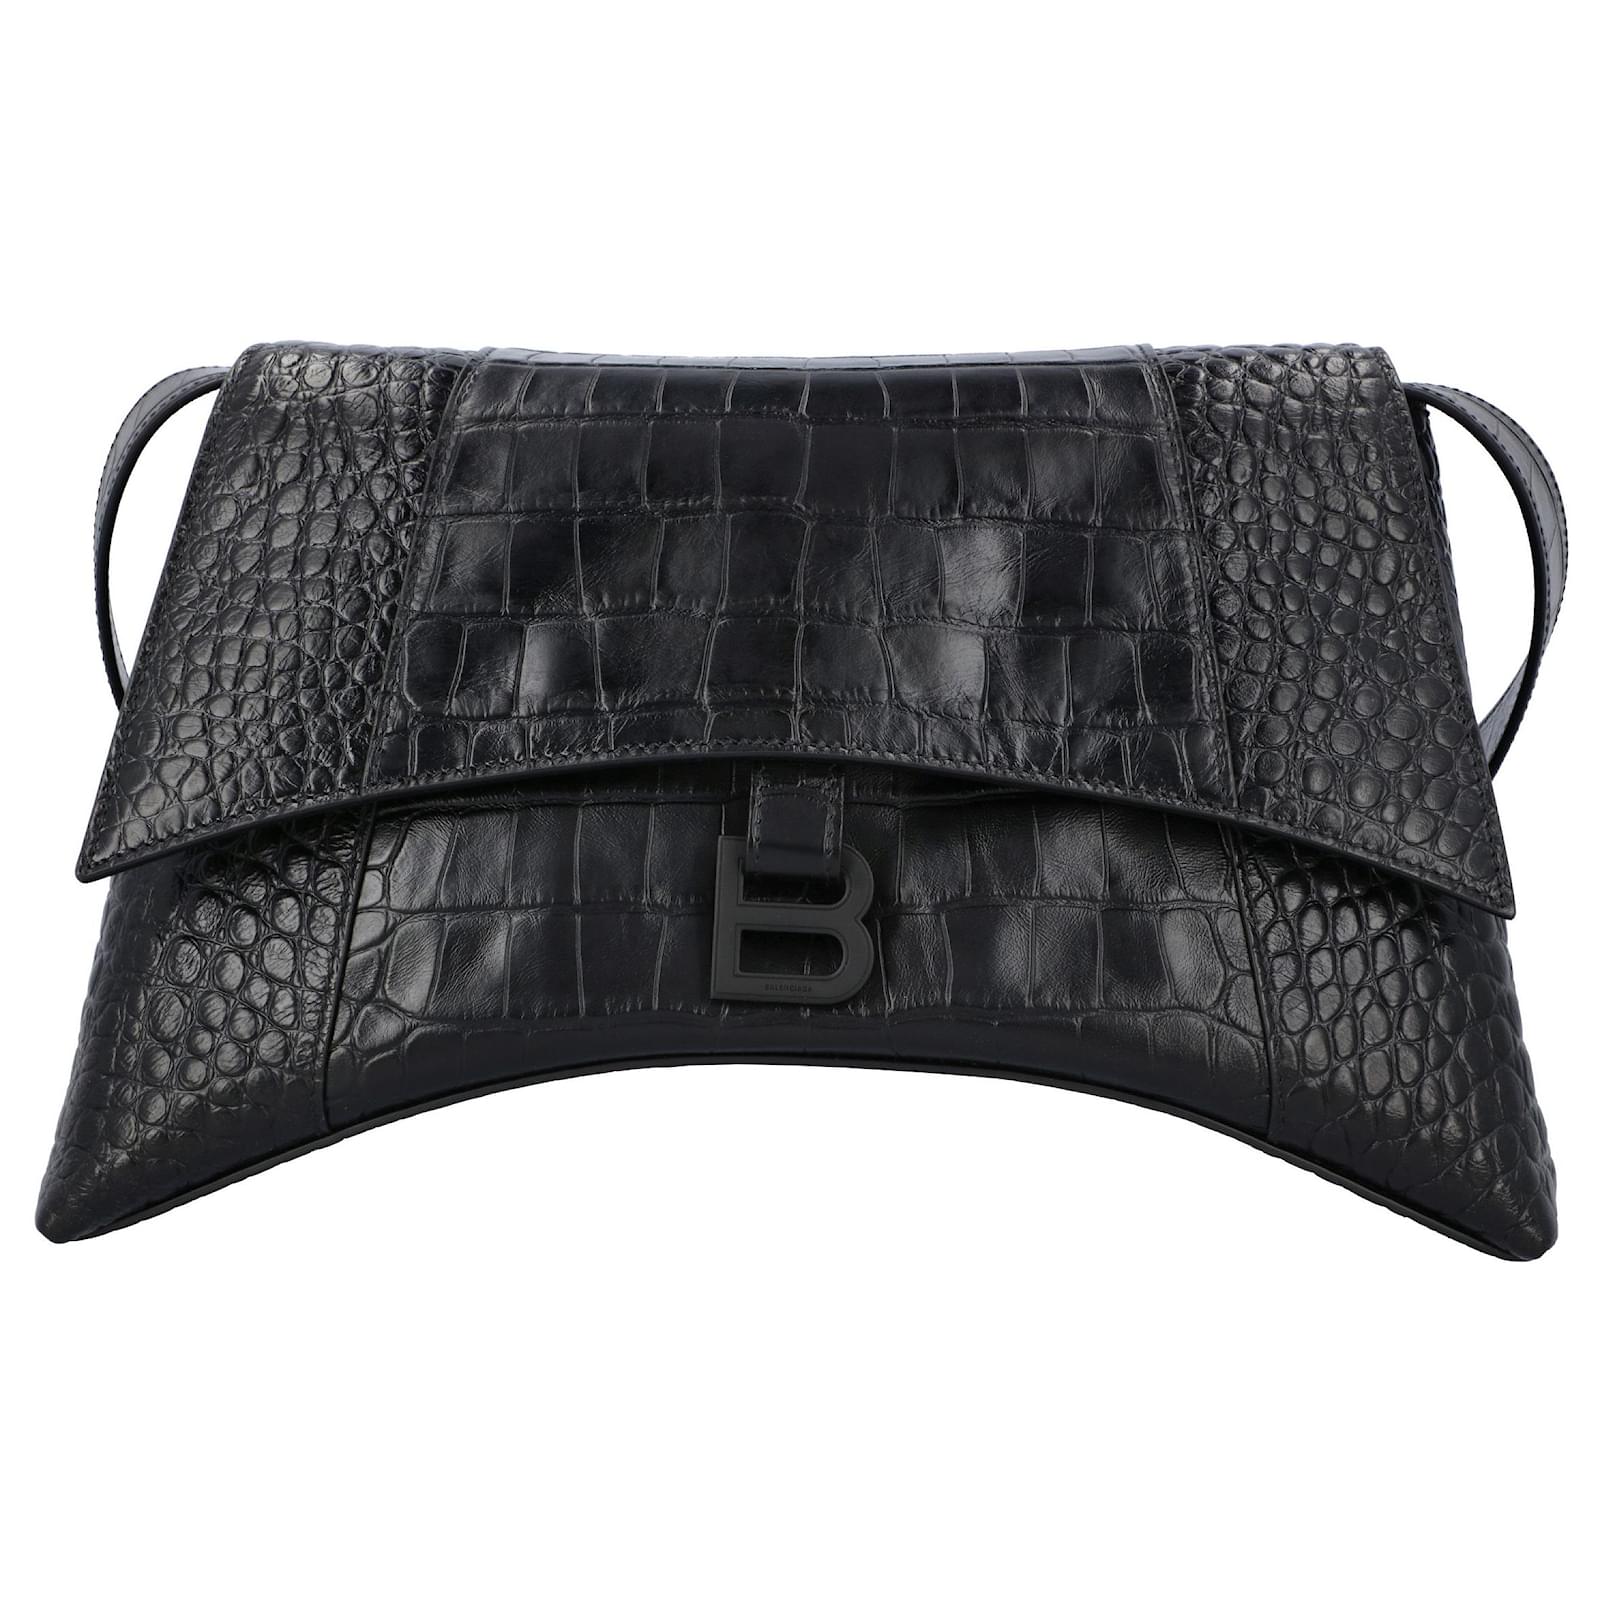 Balenciaga Small Croc Embossed Leather Top Handle Bag